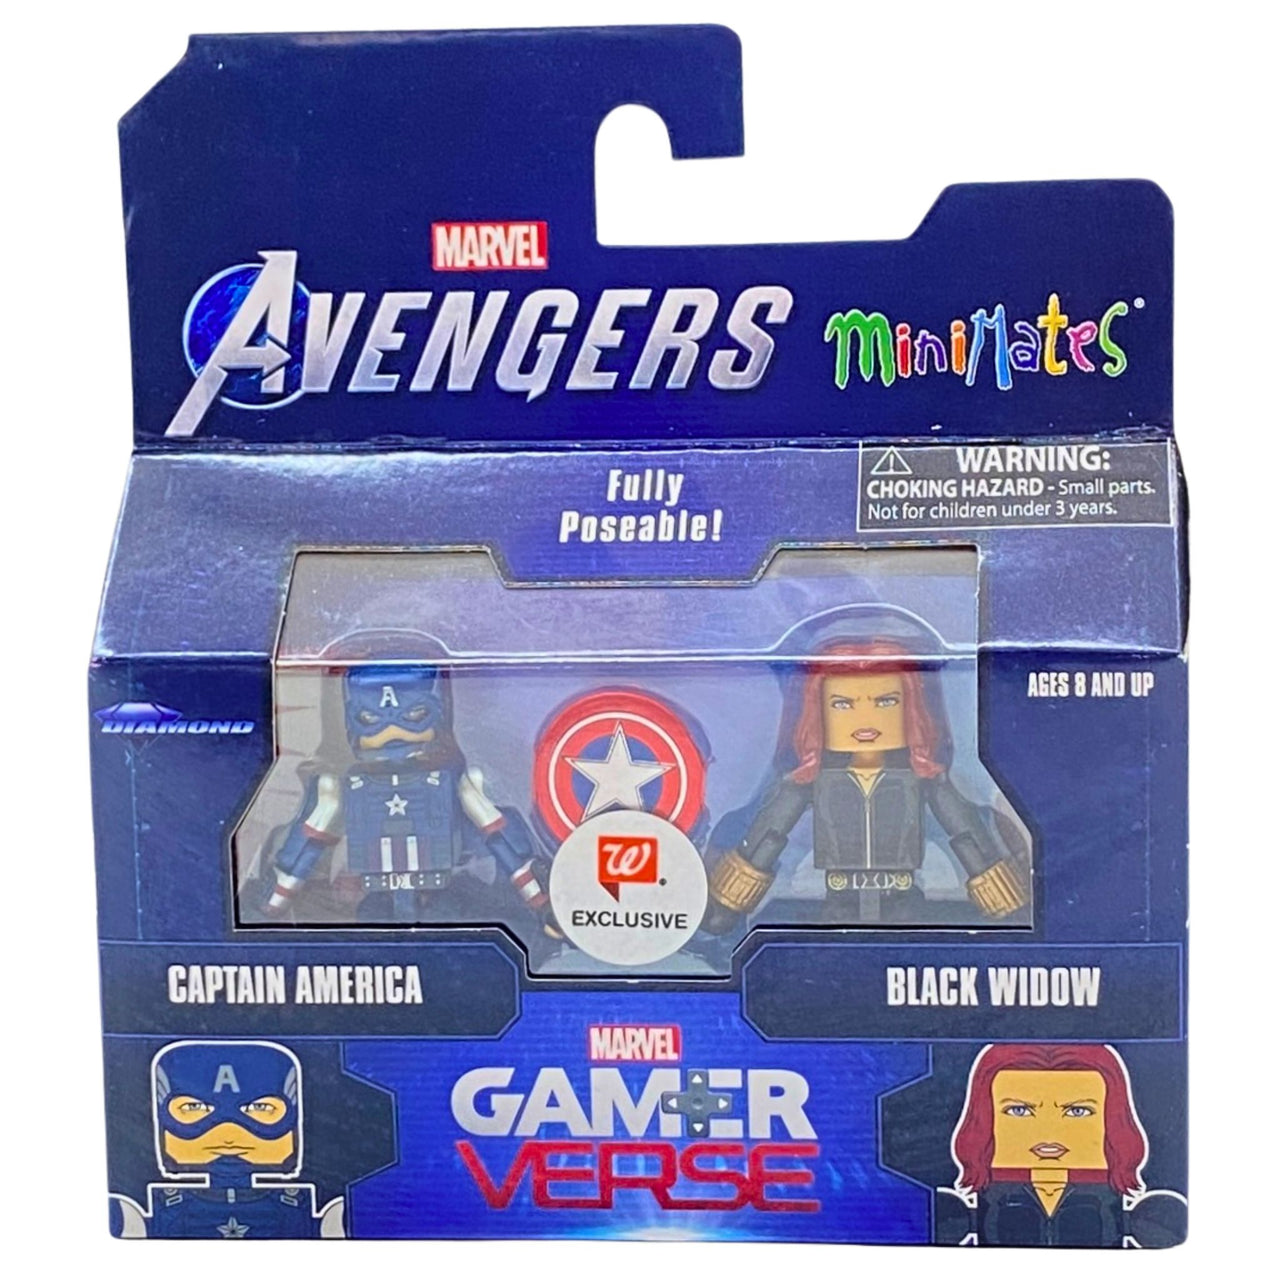 Marvel Avengers Mini Mates Captain America & Black Widow Fully Poseable! Ages 8+